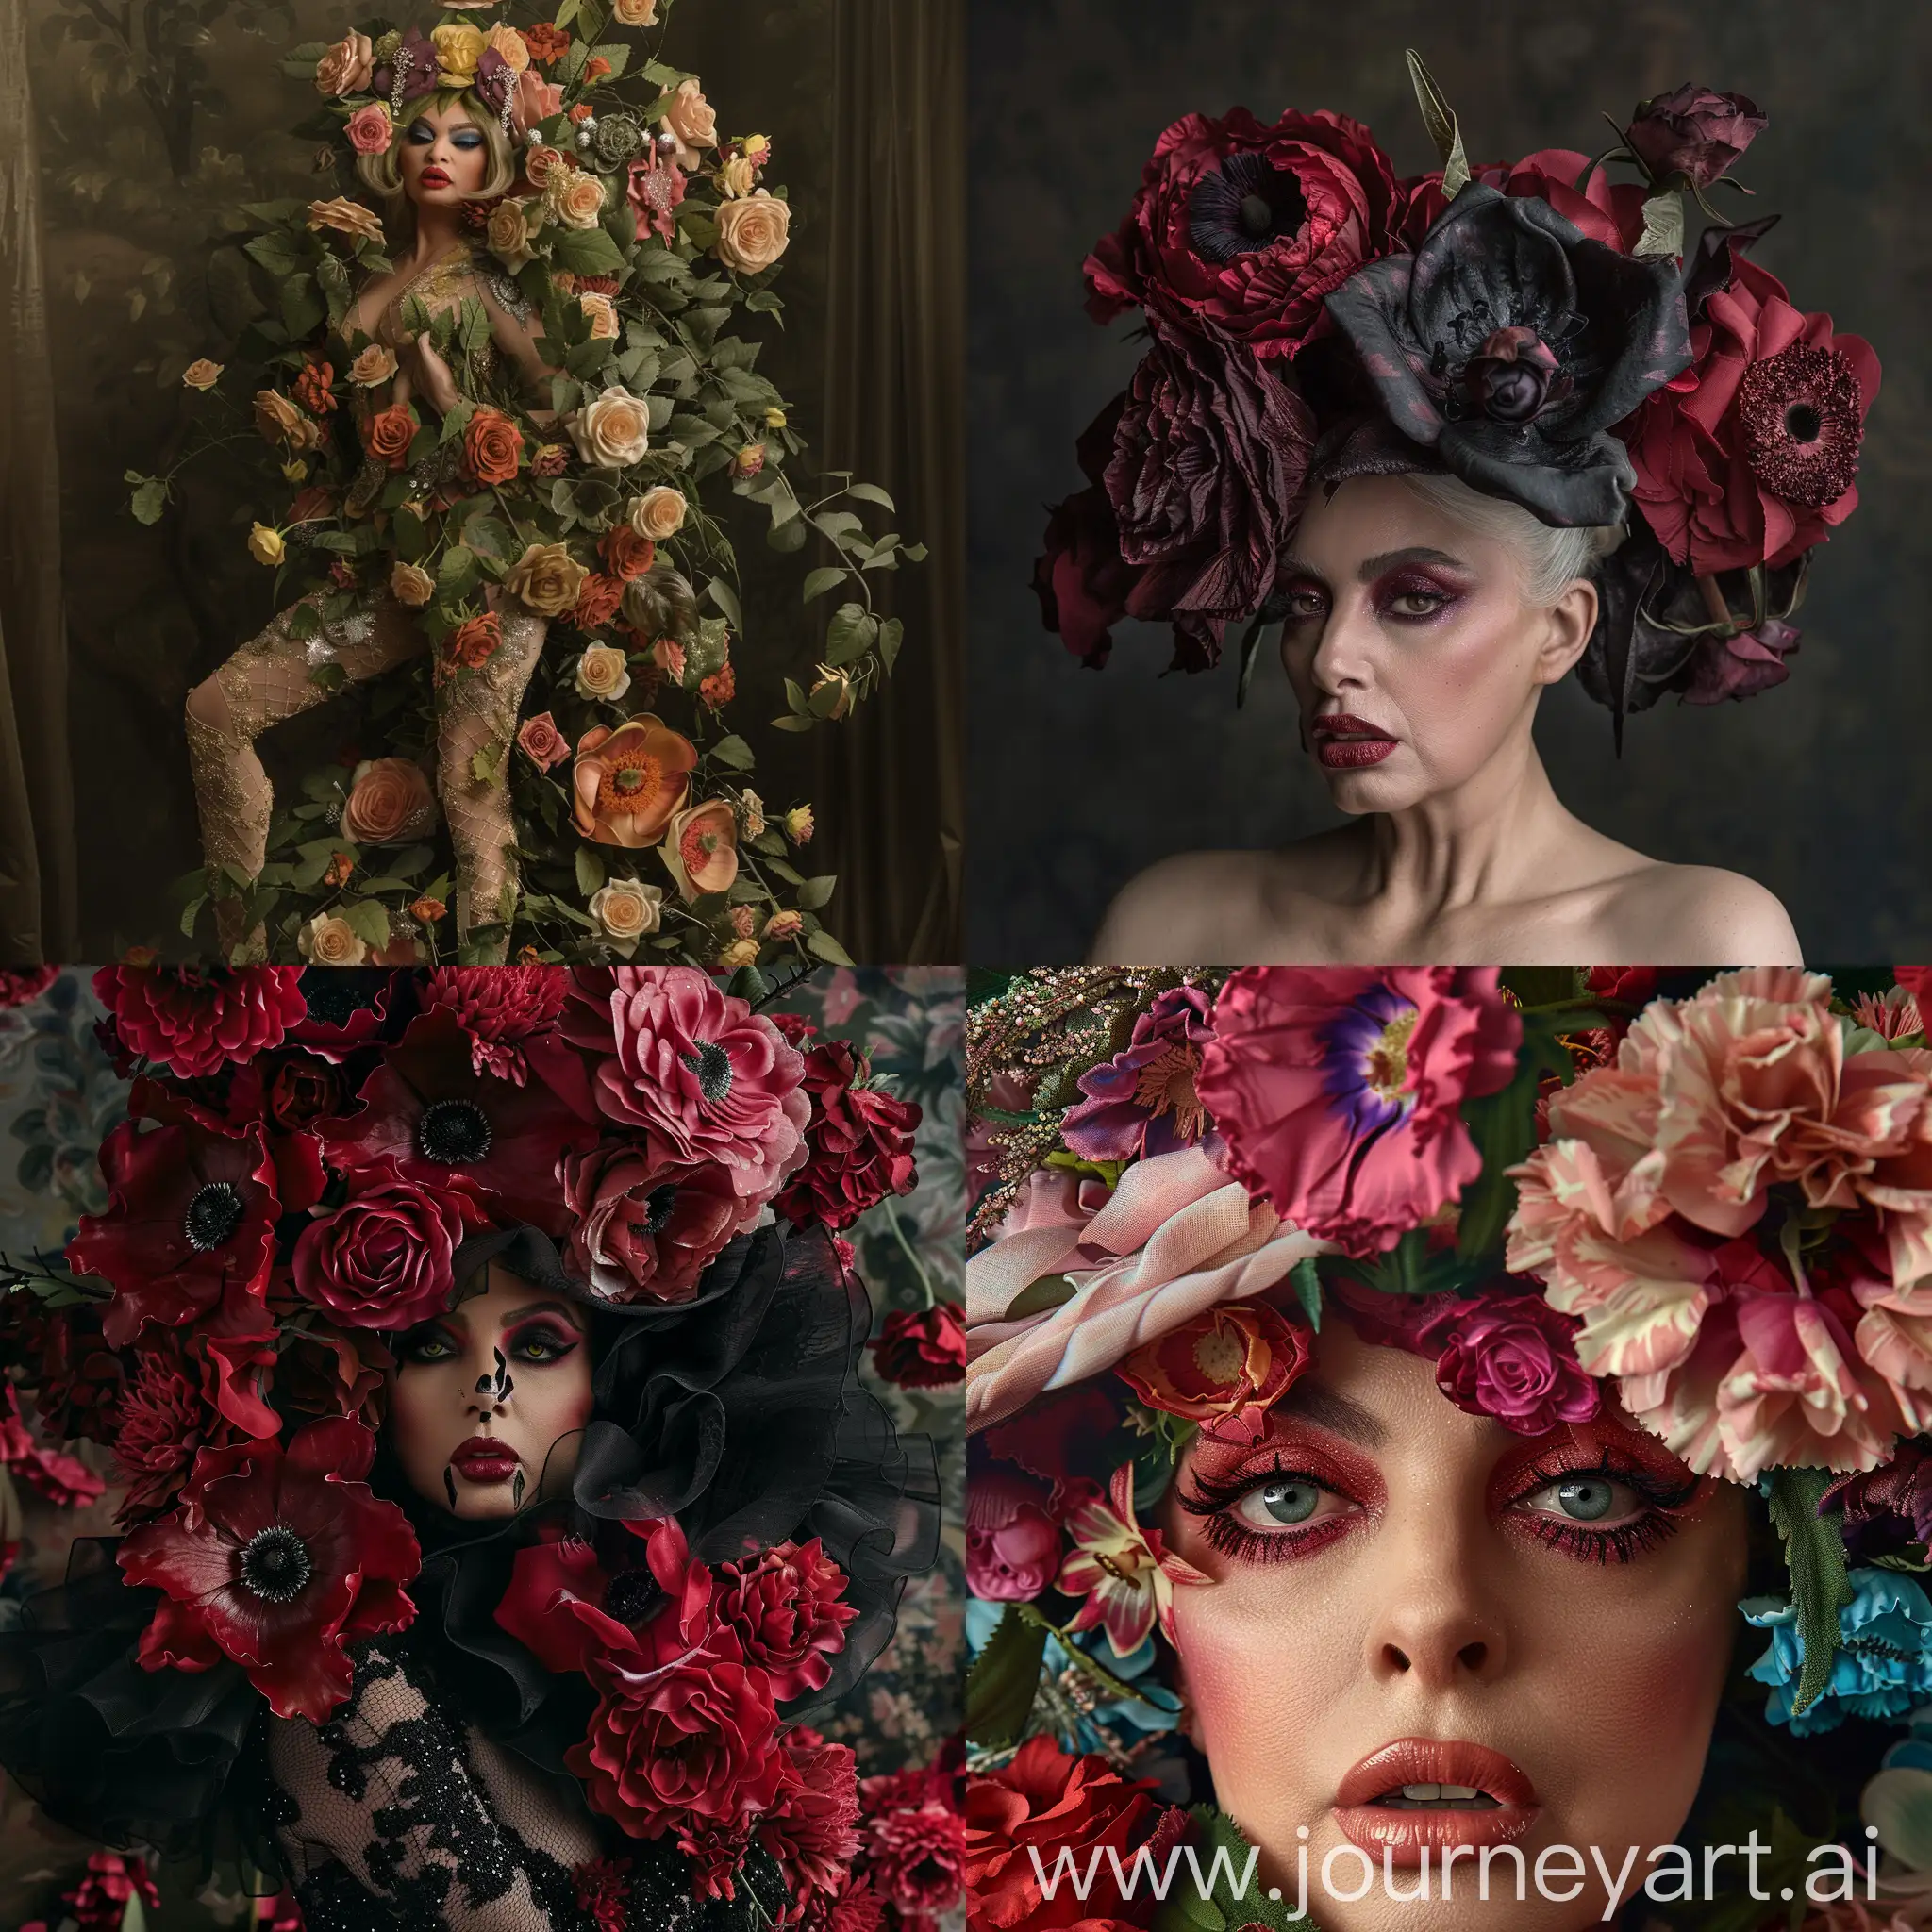 Lady-Gaga-Fashion-Magazine-Photoshoot-with-Realistic-Flower-Theme